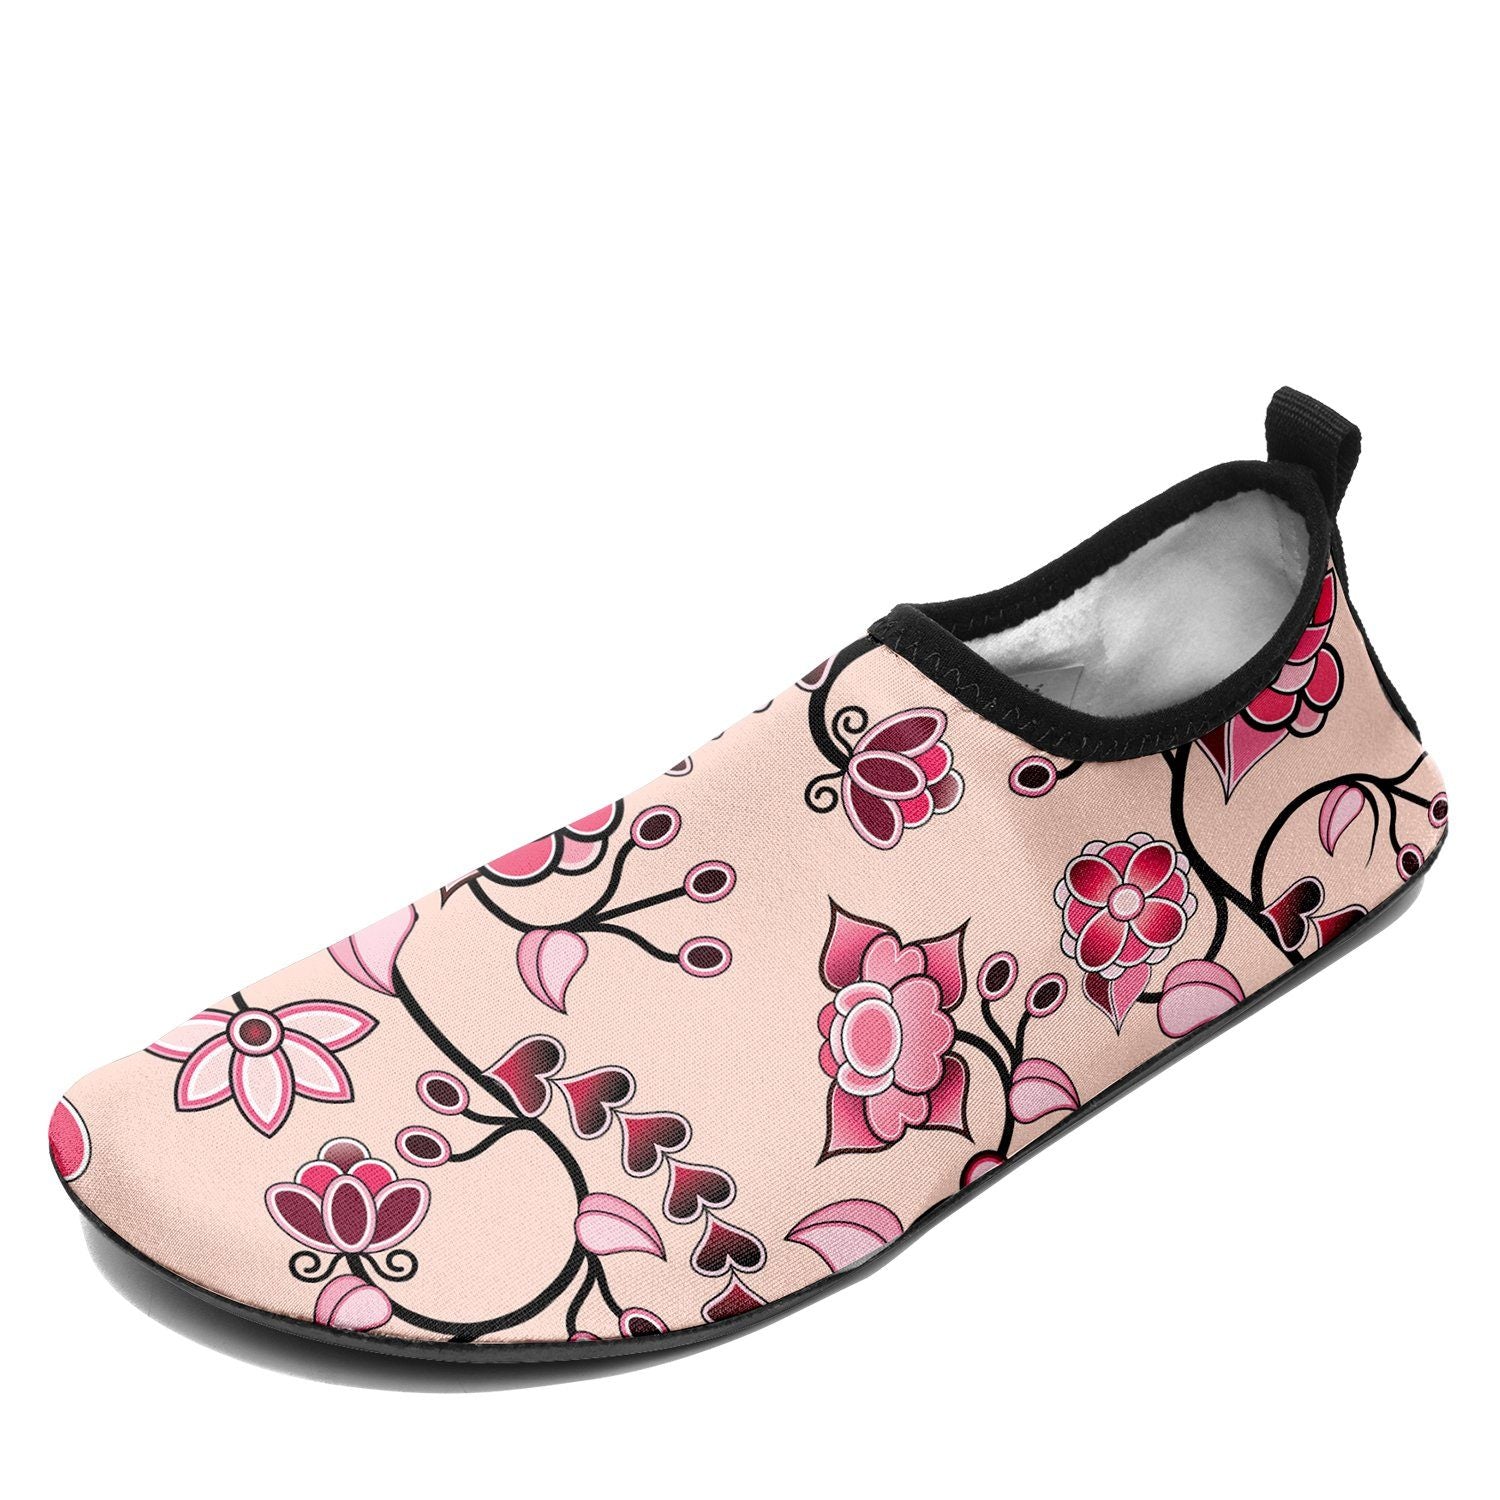 Floral Amour Sockamoccs Slip On Shoes Herman 